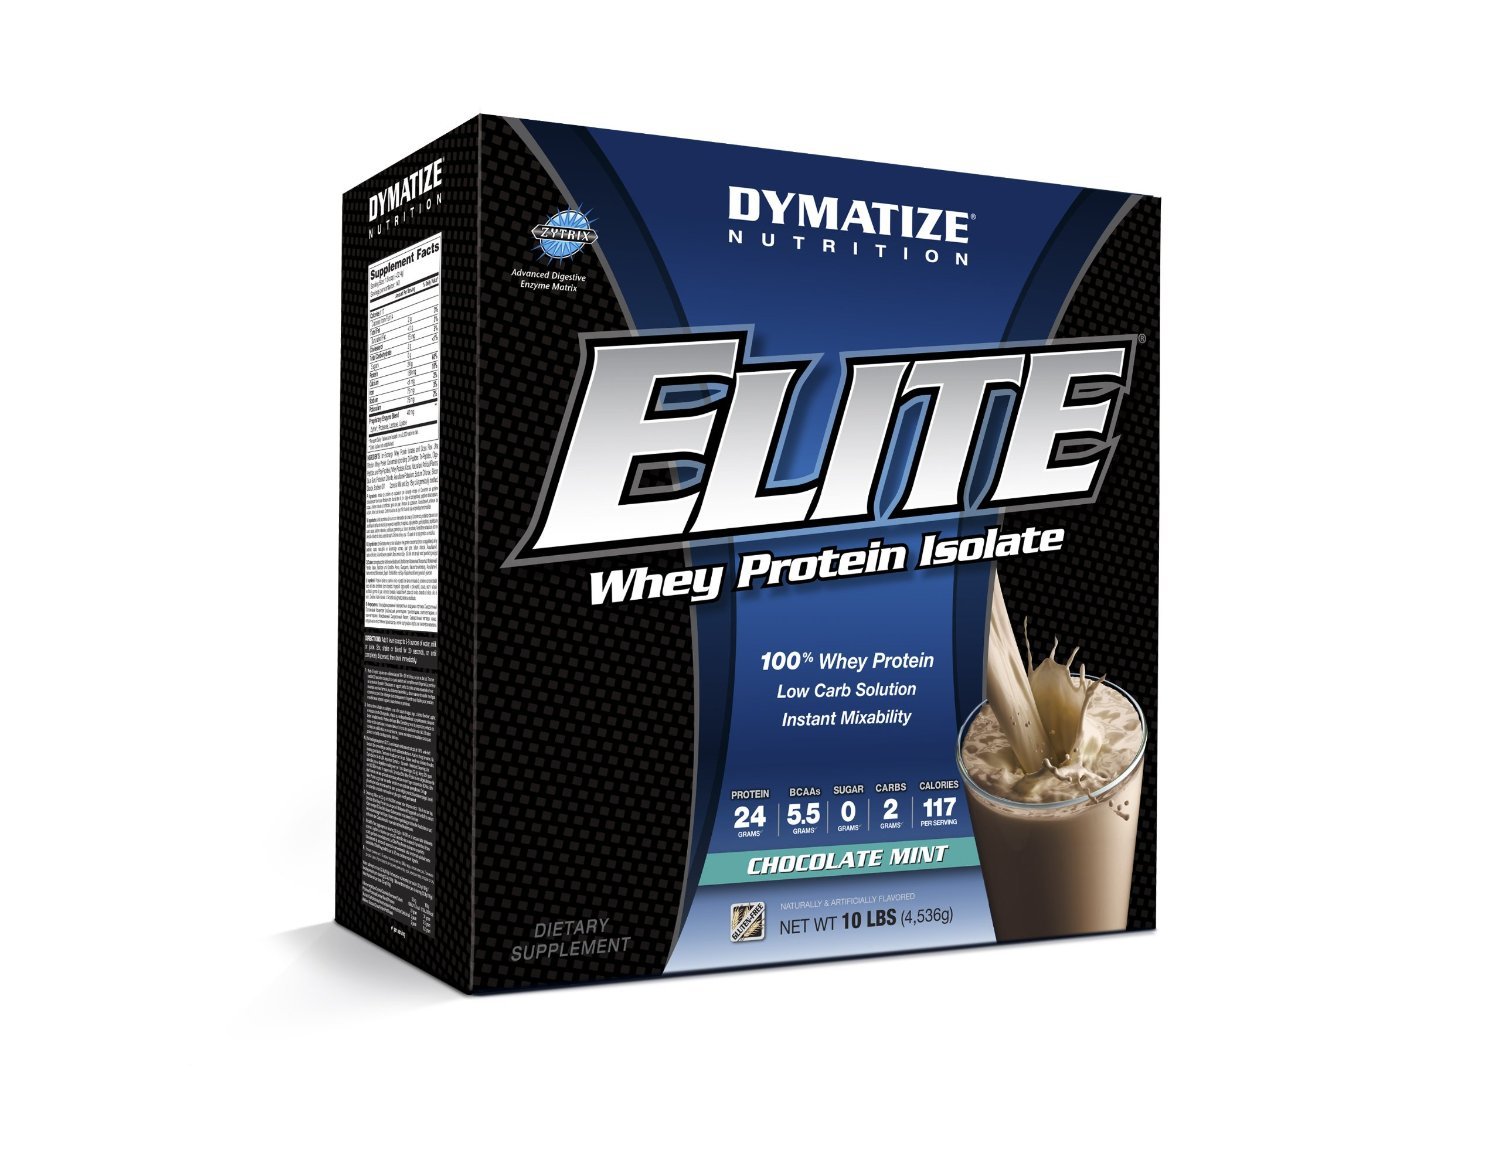 Elite Whey Protein Isolate, 4580 g, Dymatize Nutrition. Suero aislado. Lean muscle mass Weight Loss recuperación Anti-catabolic properties 